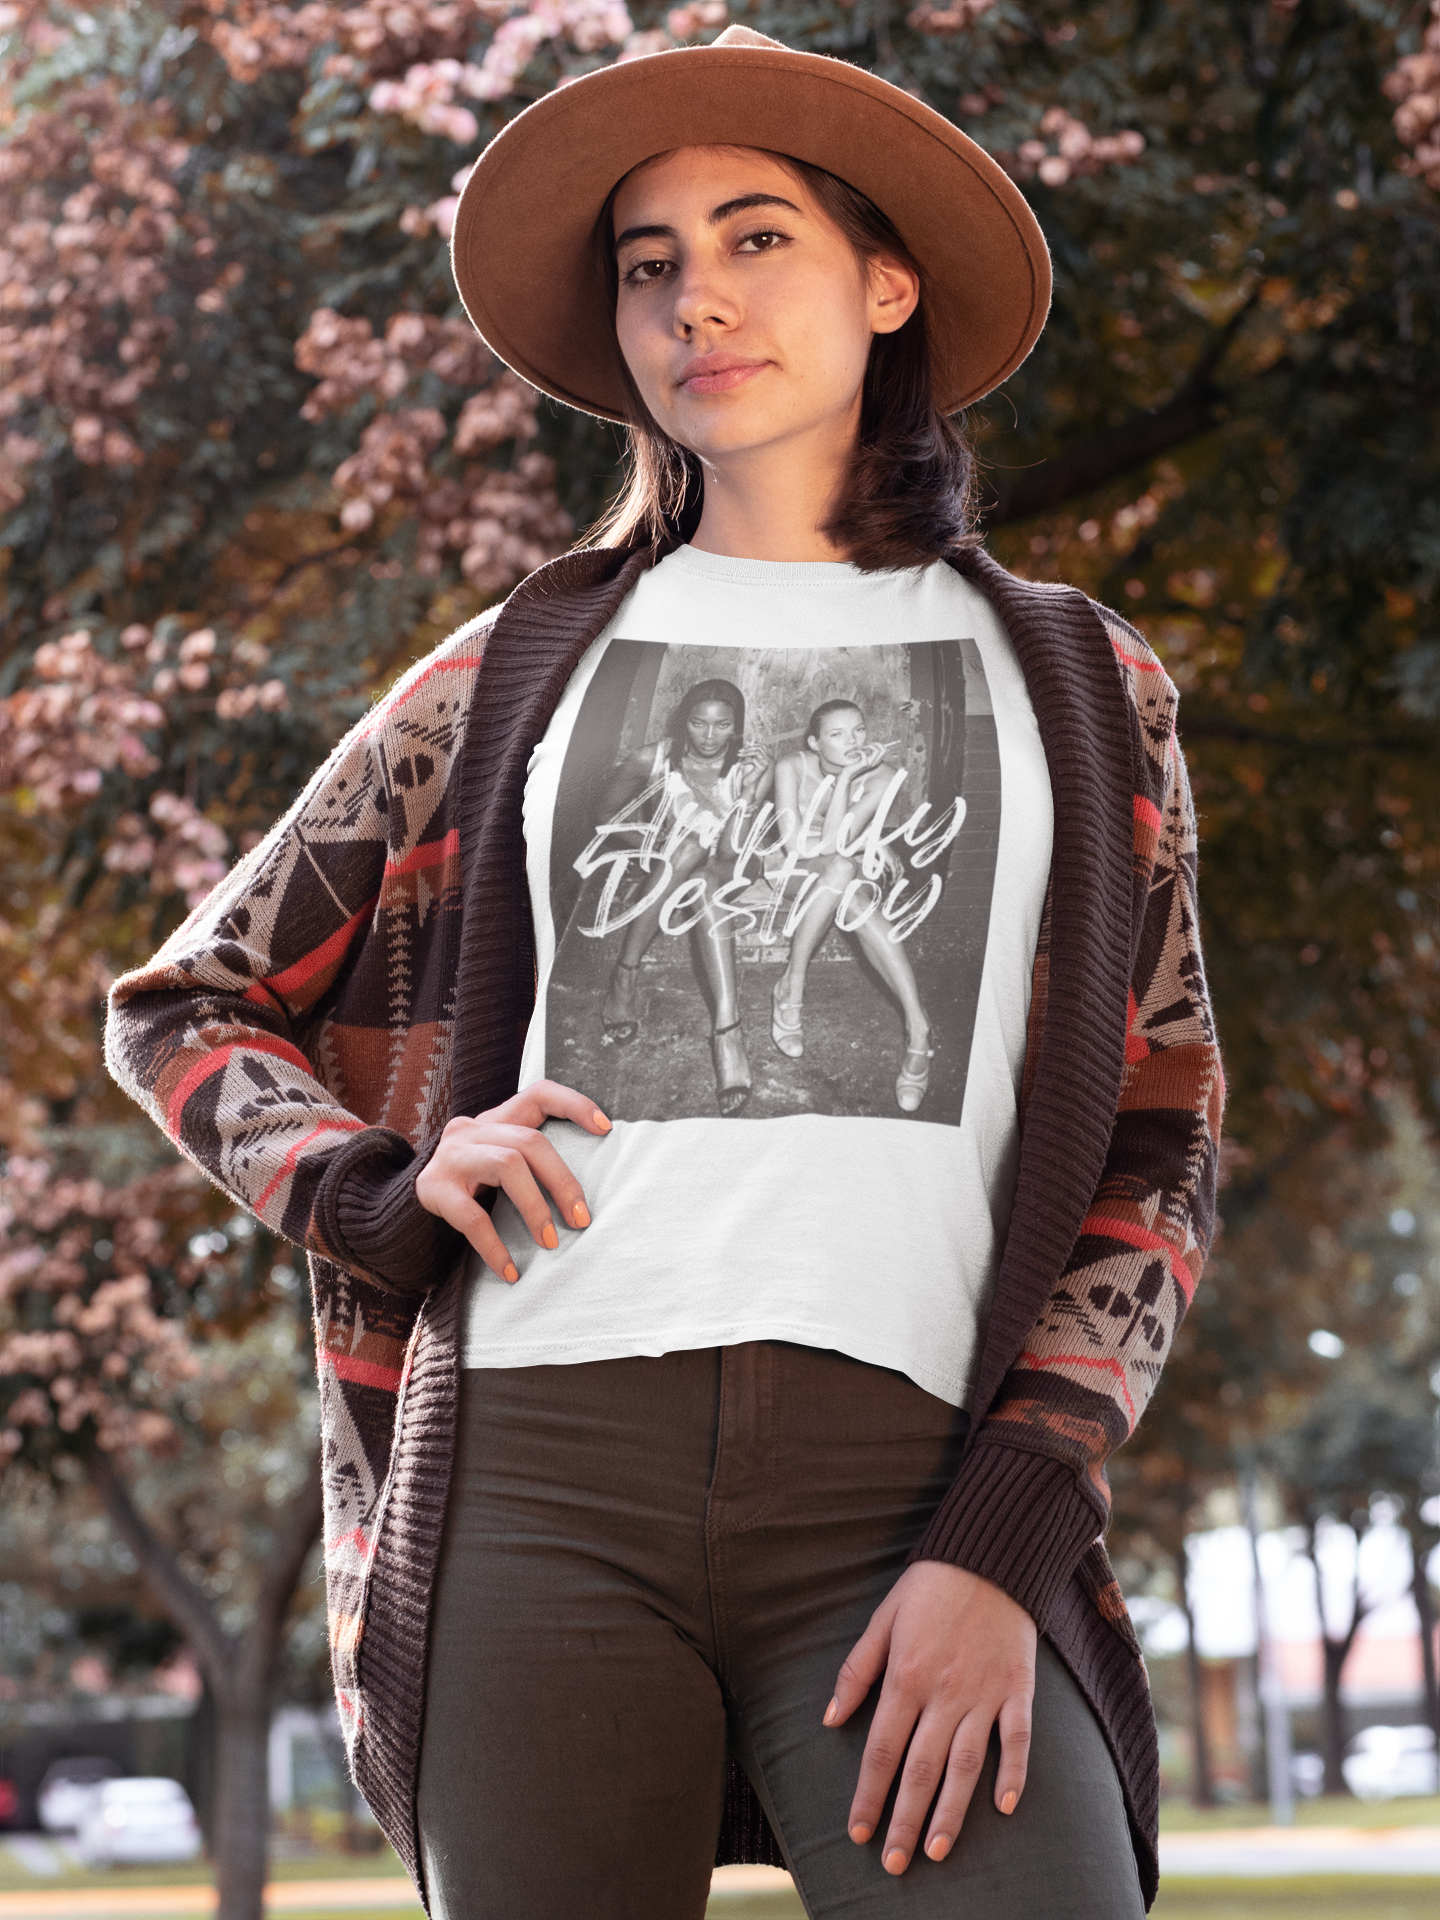 GIRLZ Classic Fit AmplifyDestroy Print Tee Shirt